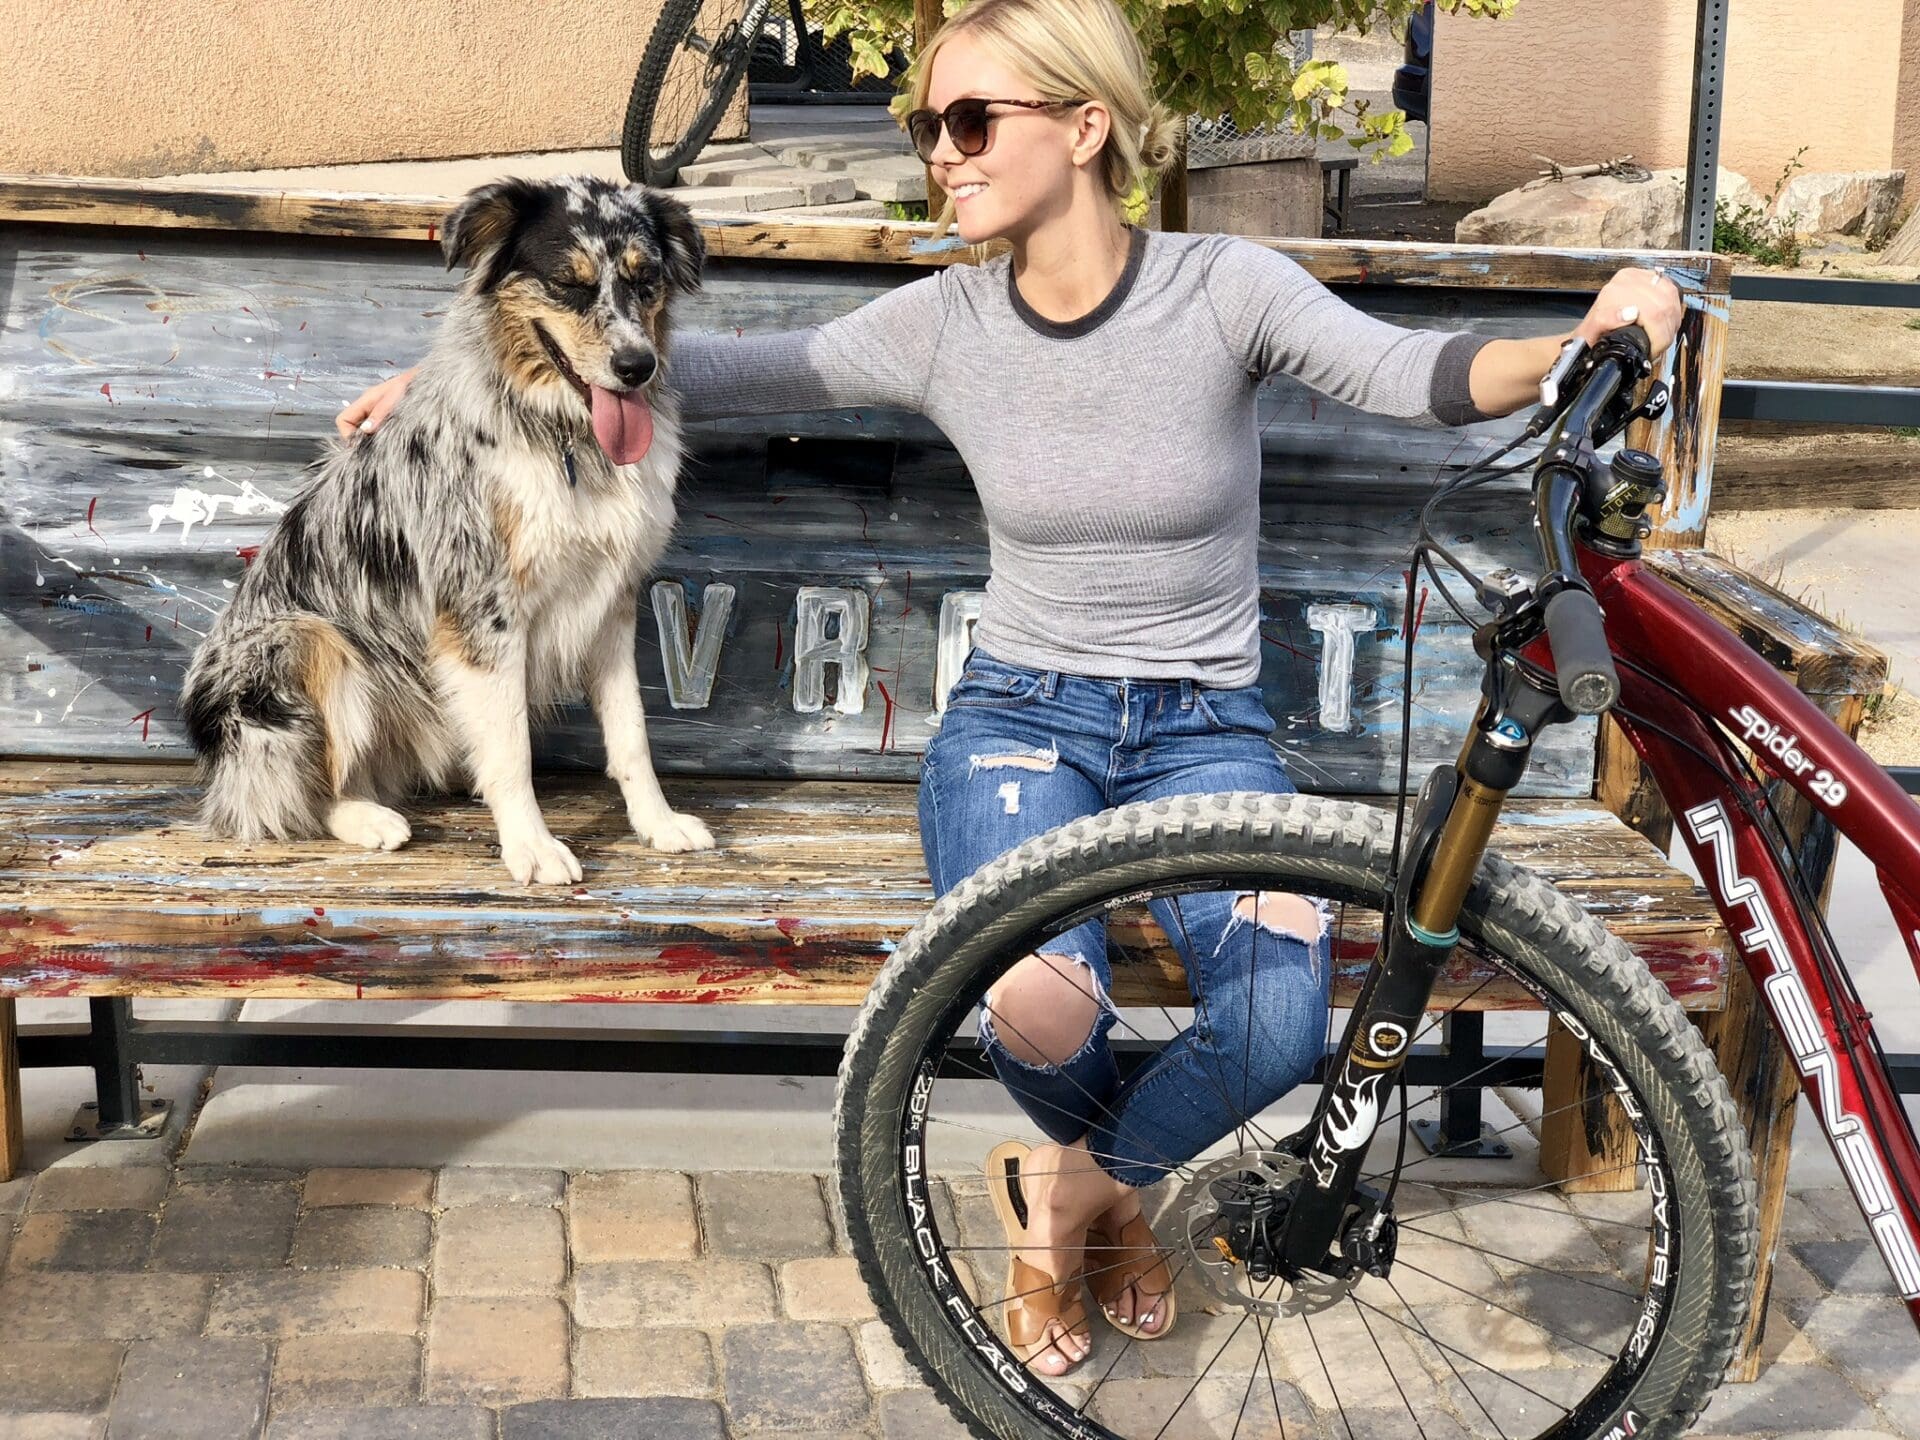 Biker with dog 2